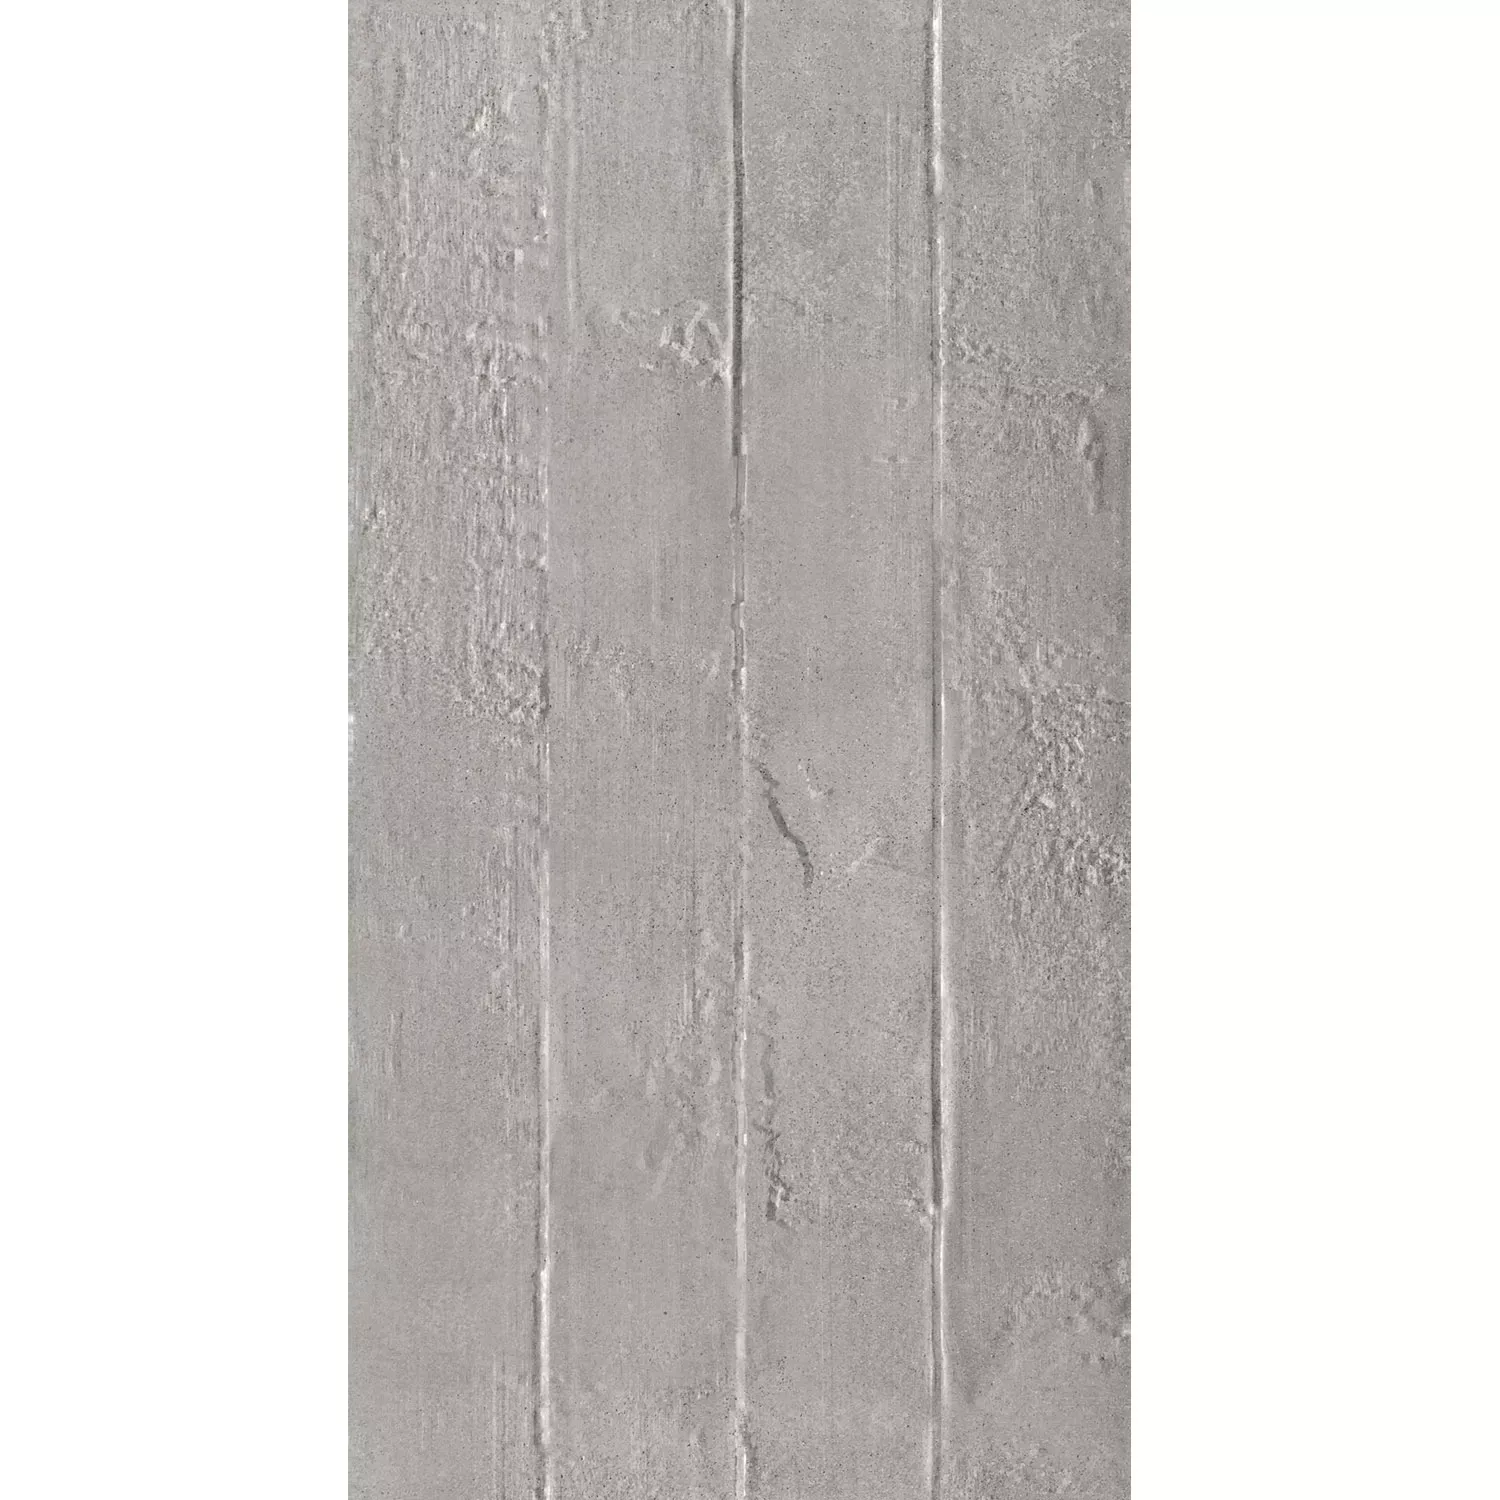 Ladrilho Olhar de Pedra Lobetal Cinza 45x90cm